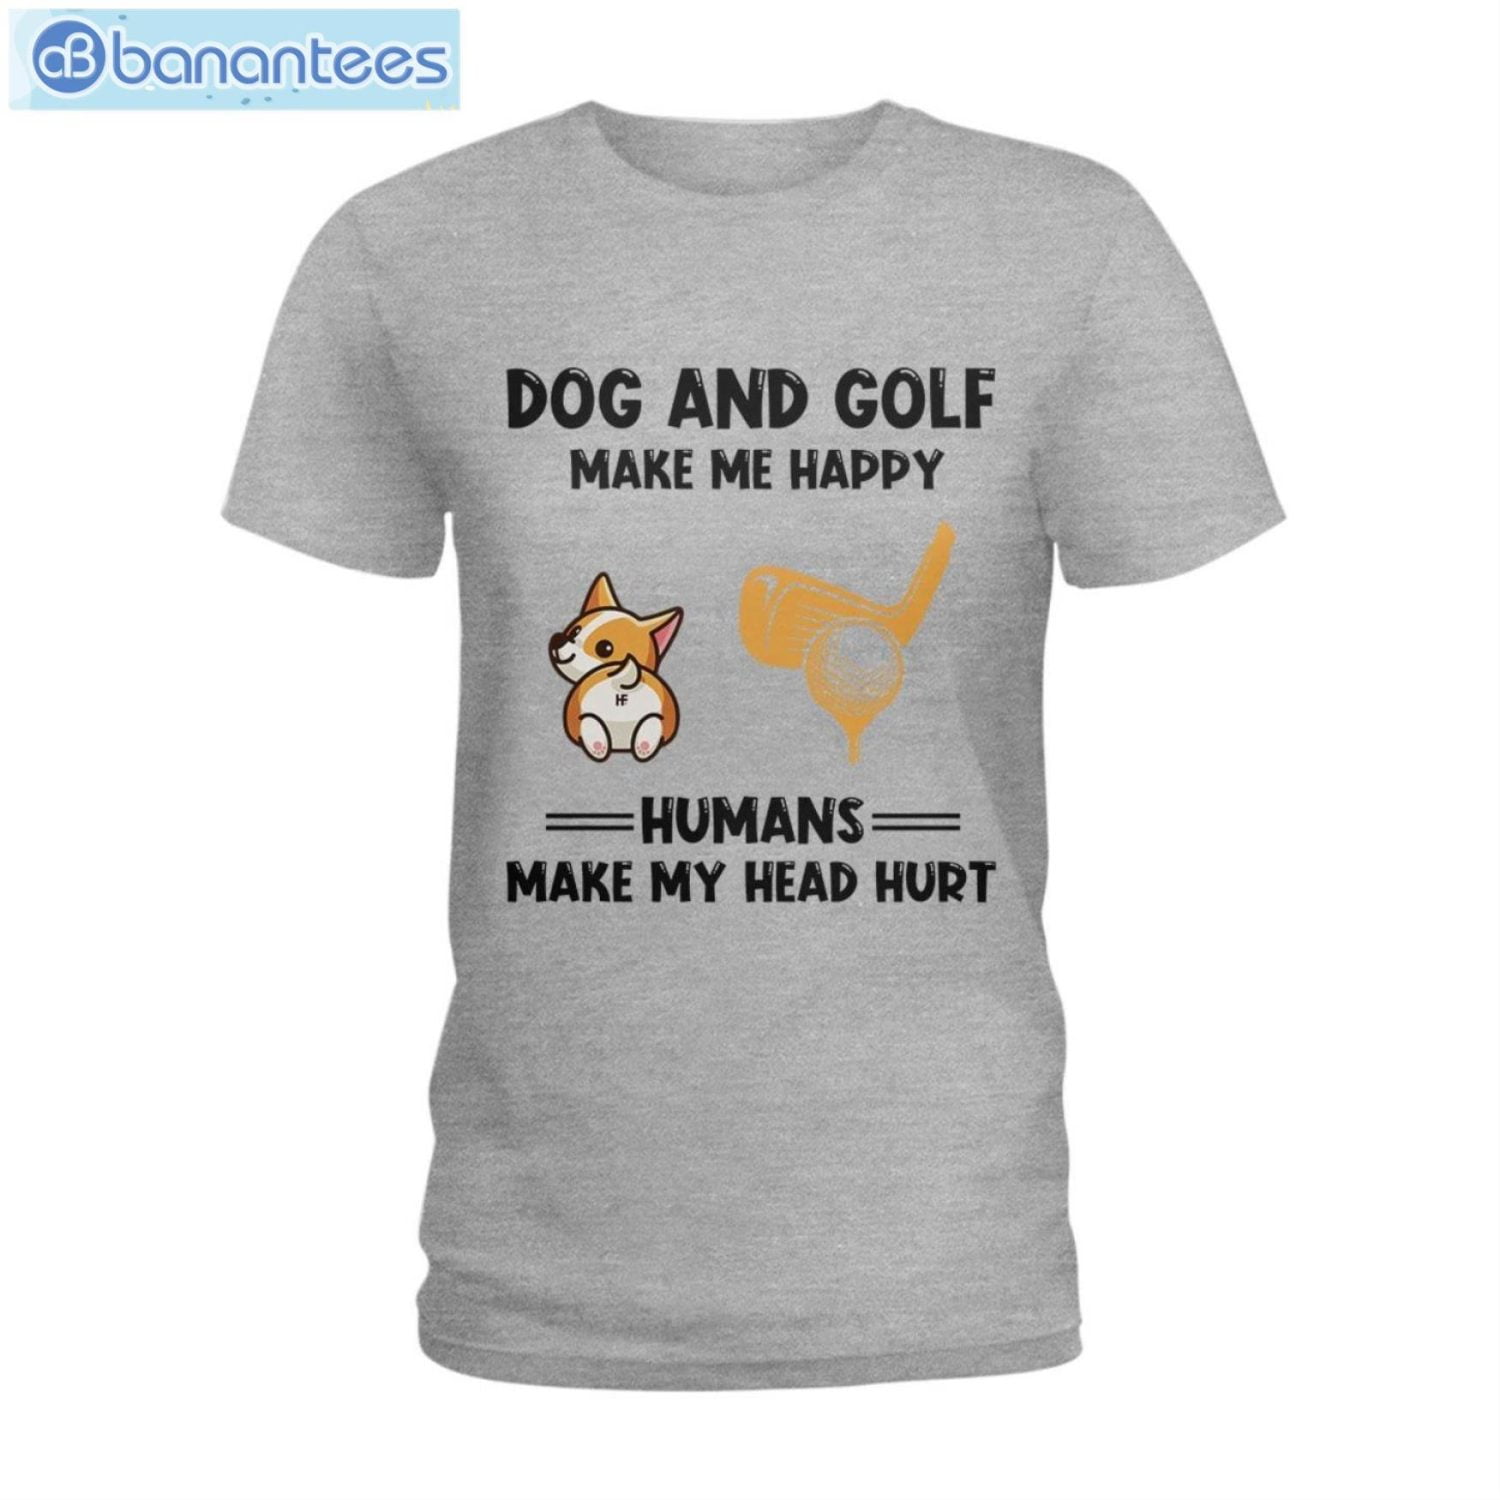 Dogs And Golf Make Me Happy Human Make Me Head Hurt T-Shirt Long Sleeve Tee Product Photo 2 Product photo 2